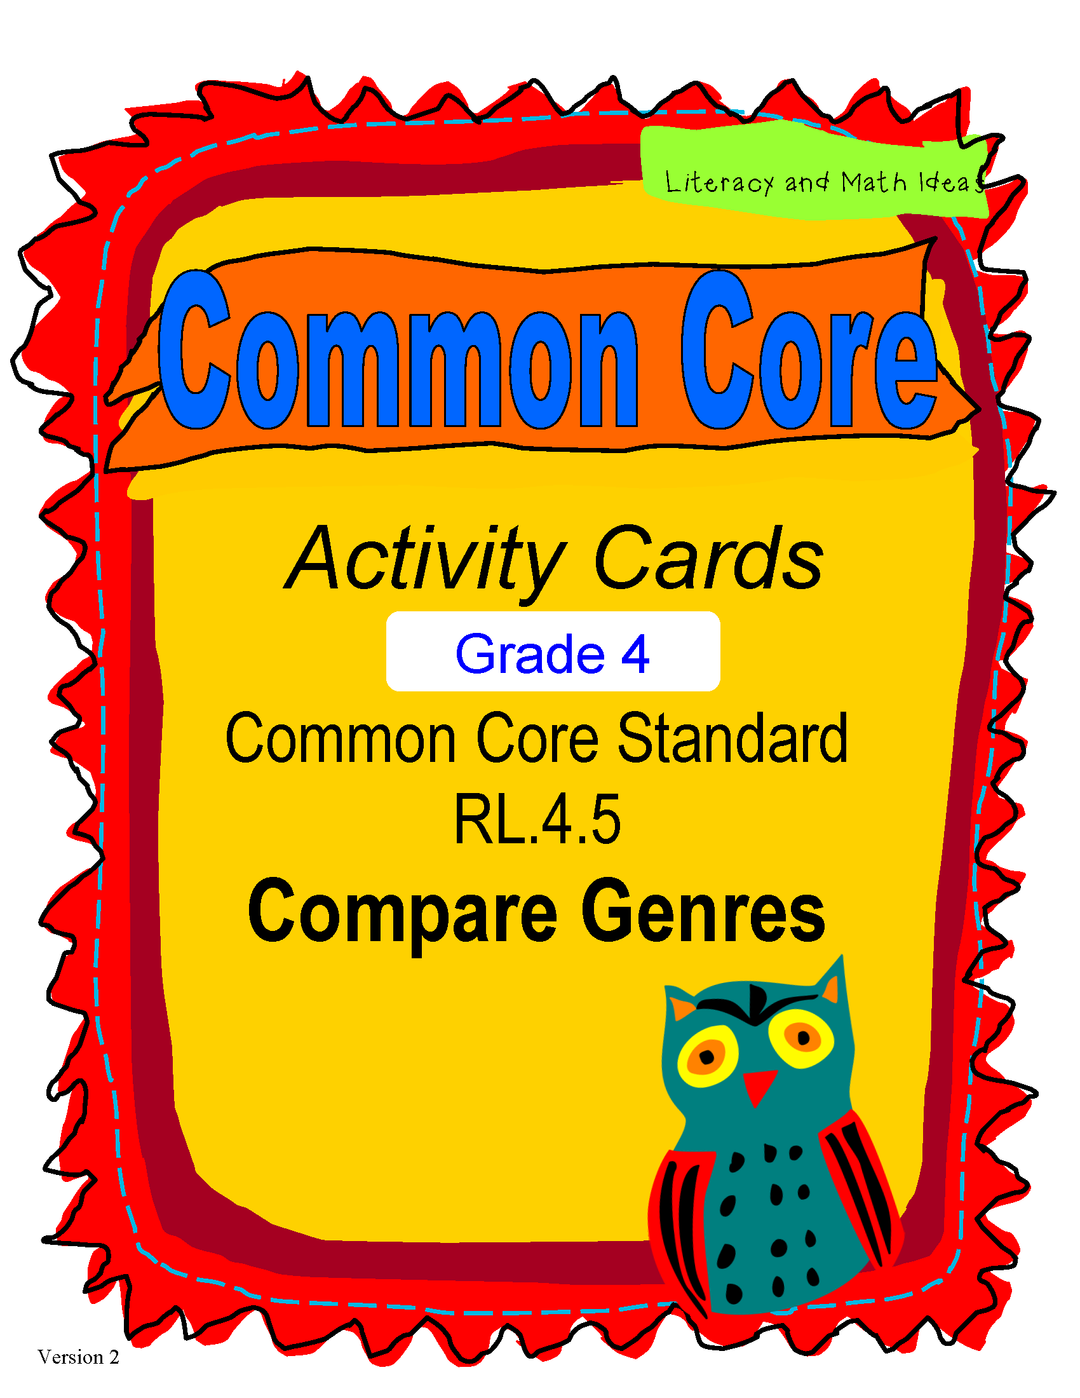 Compare Genres Activity Cards Grade 4 Common Core RL.4.5